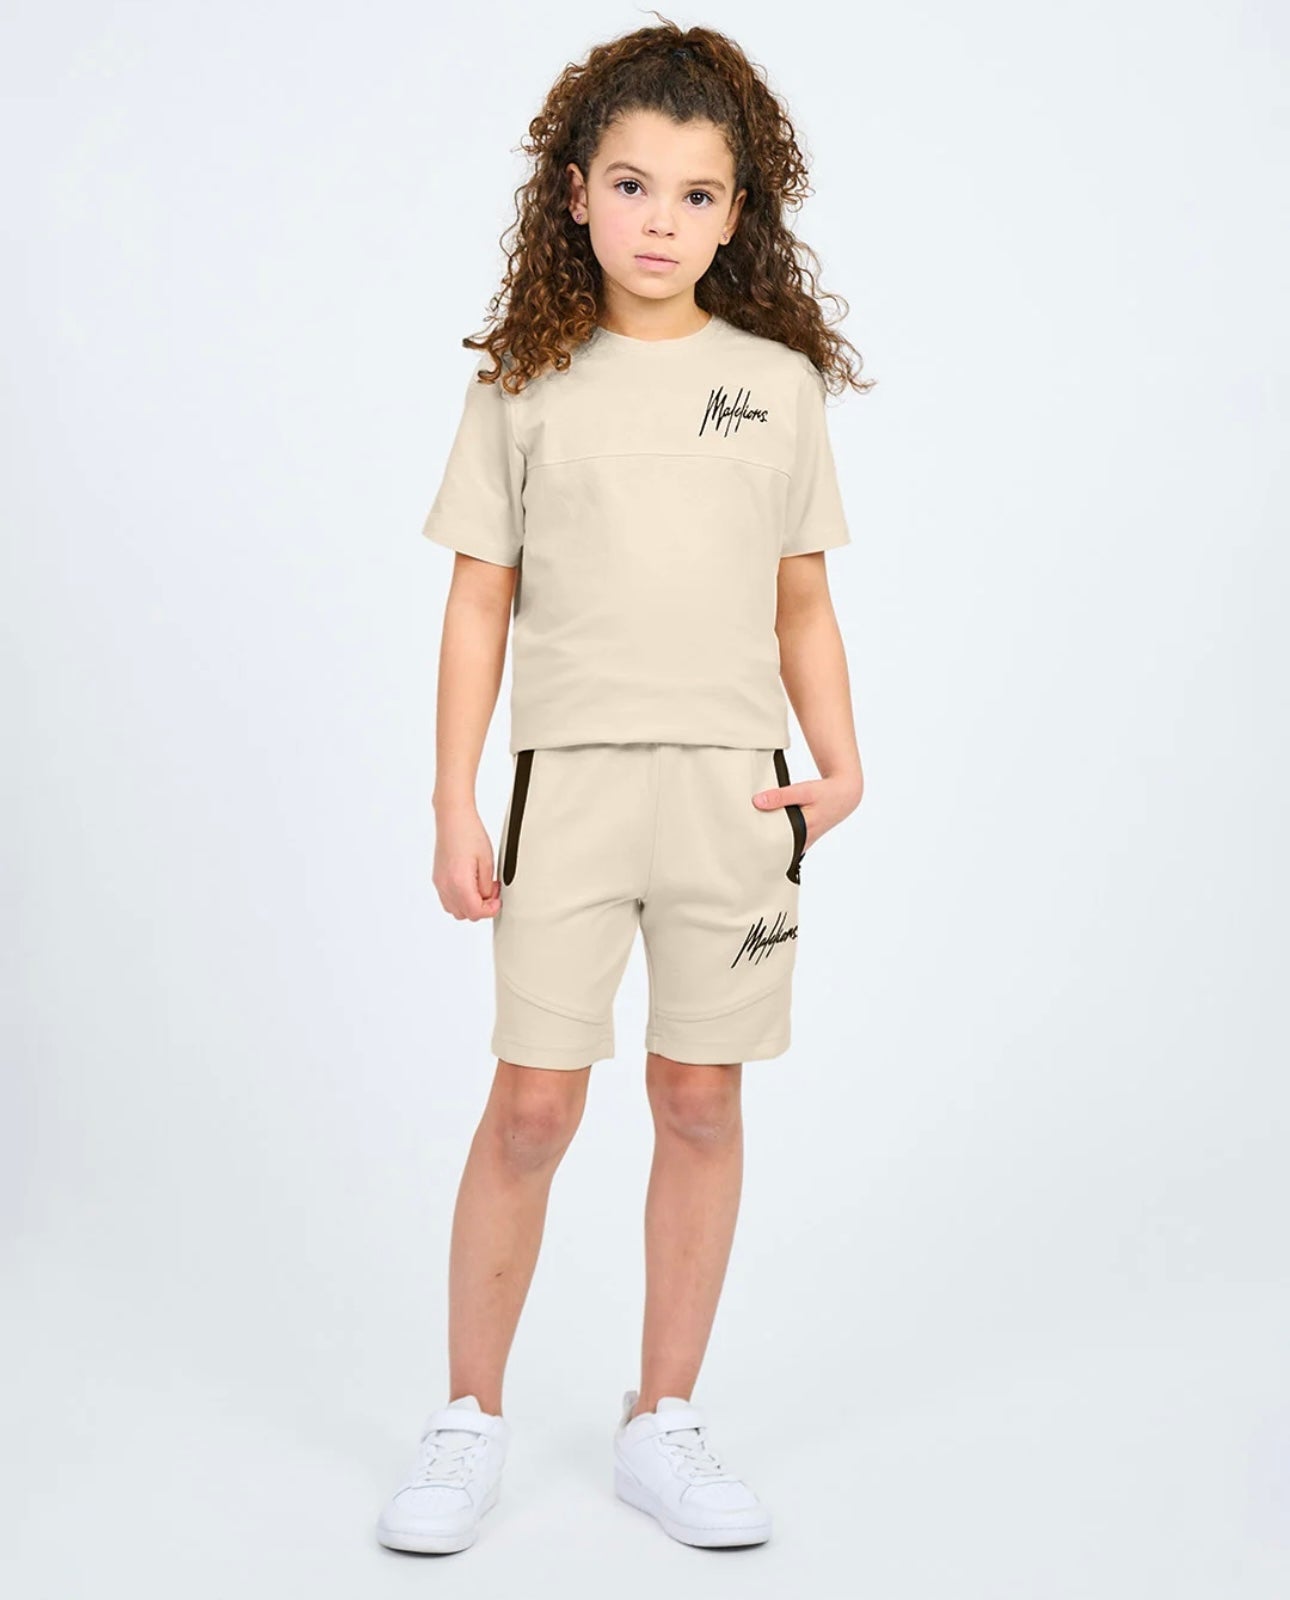 Malelions junior sport counter t-shirt - beige